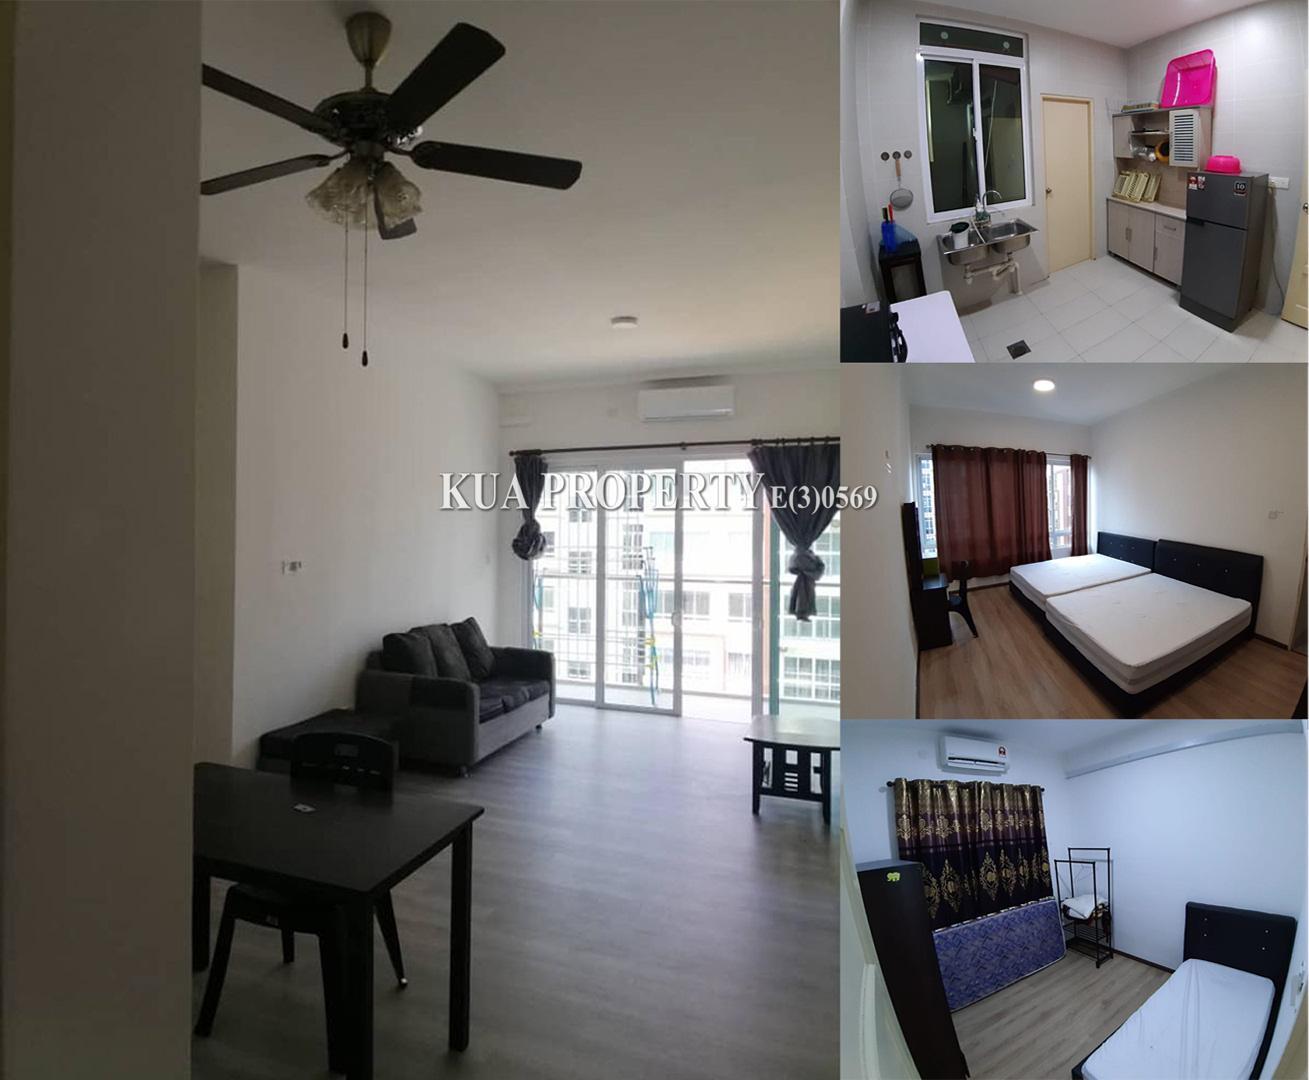 Level 6 P’residence Condominium For Rent at Batu Kawa